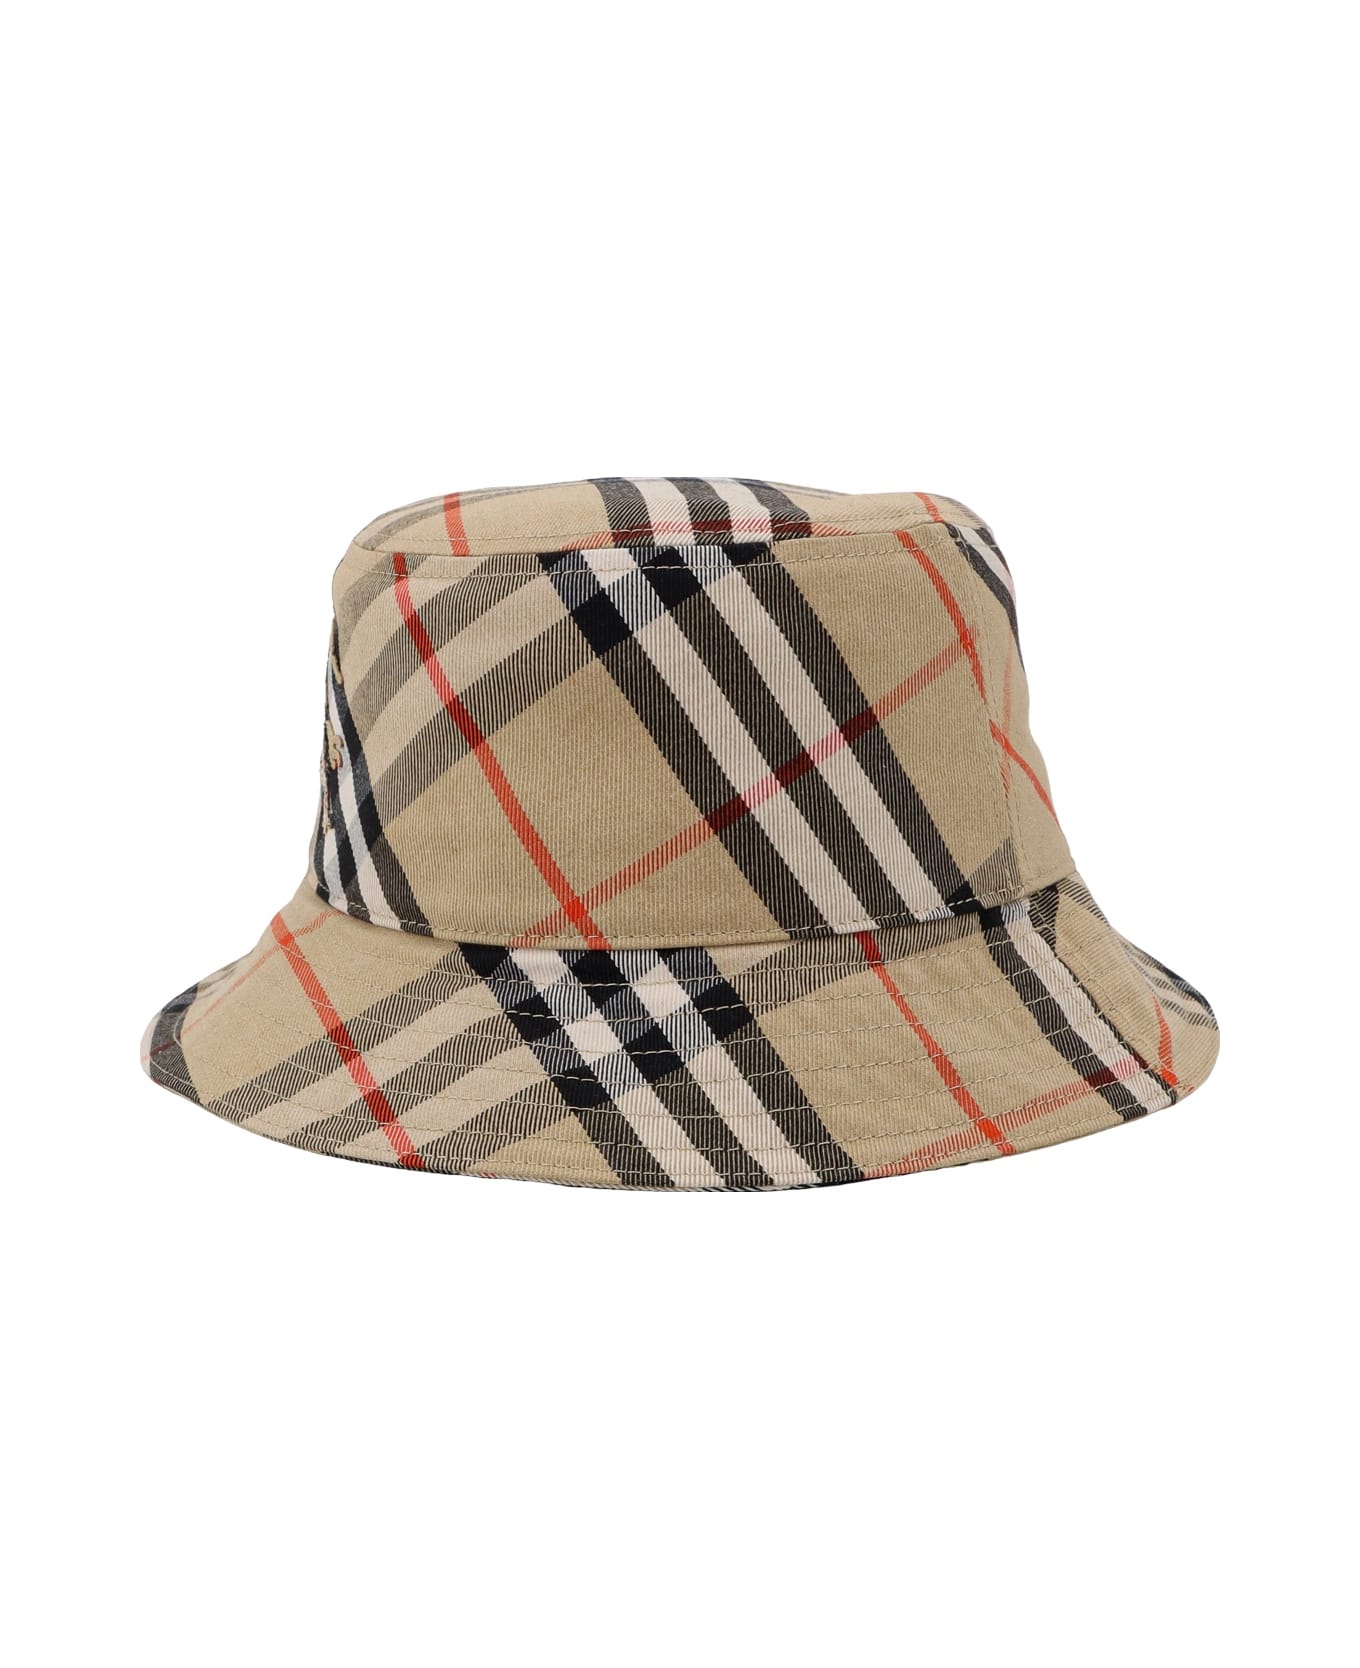 Burberry Cloche - Beige 帽子